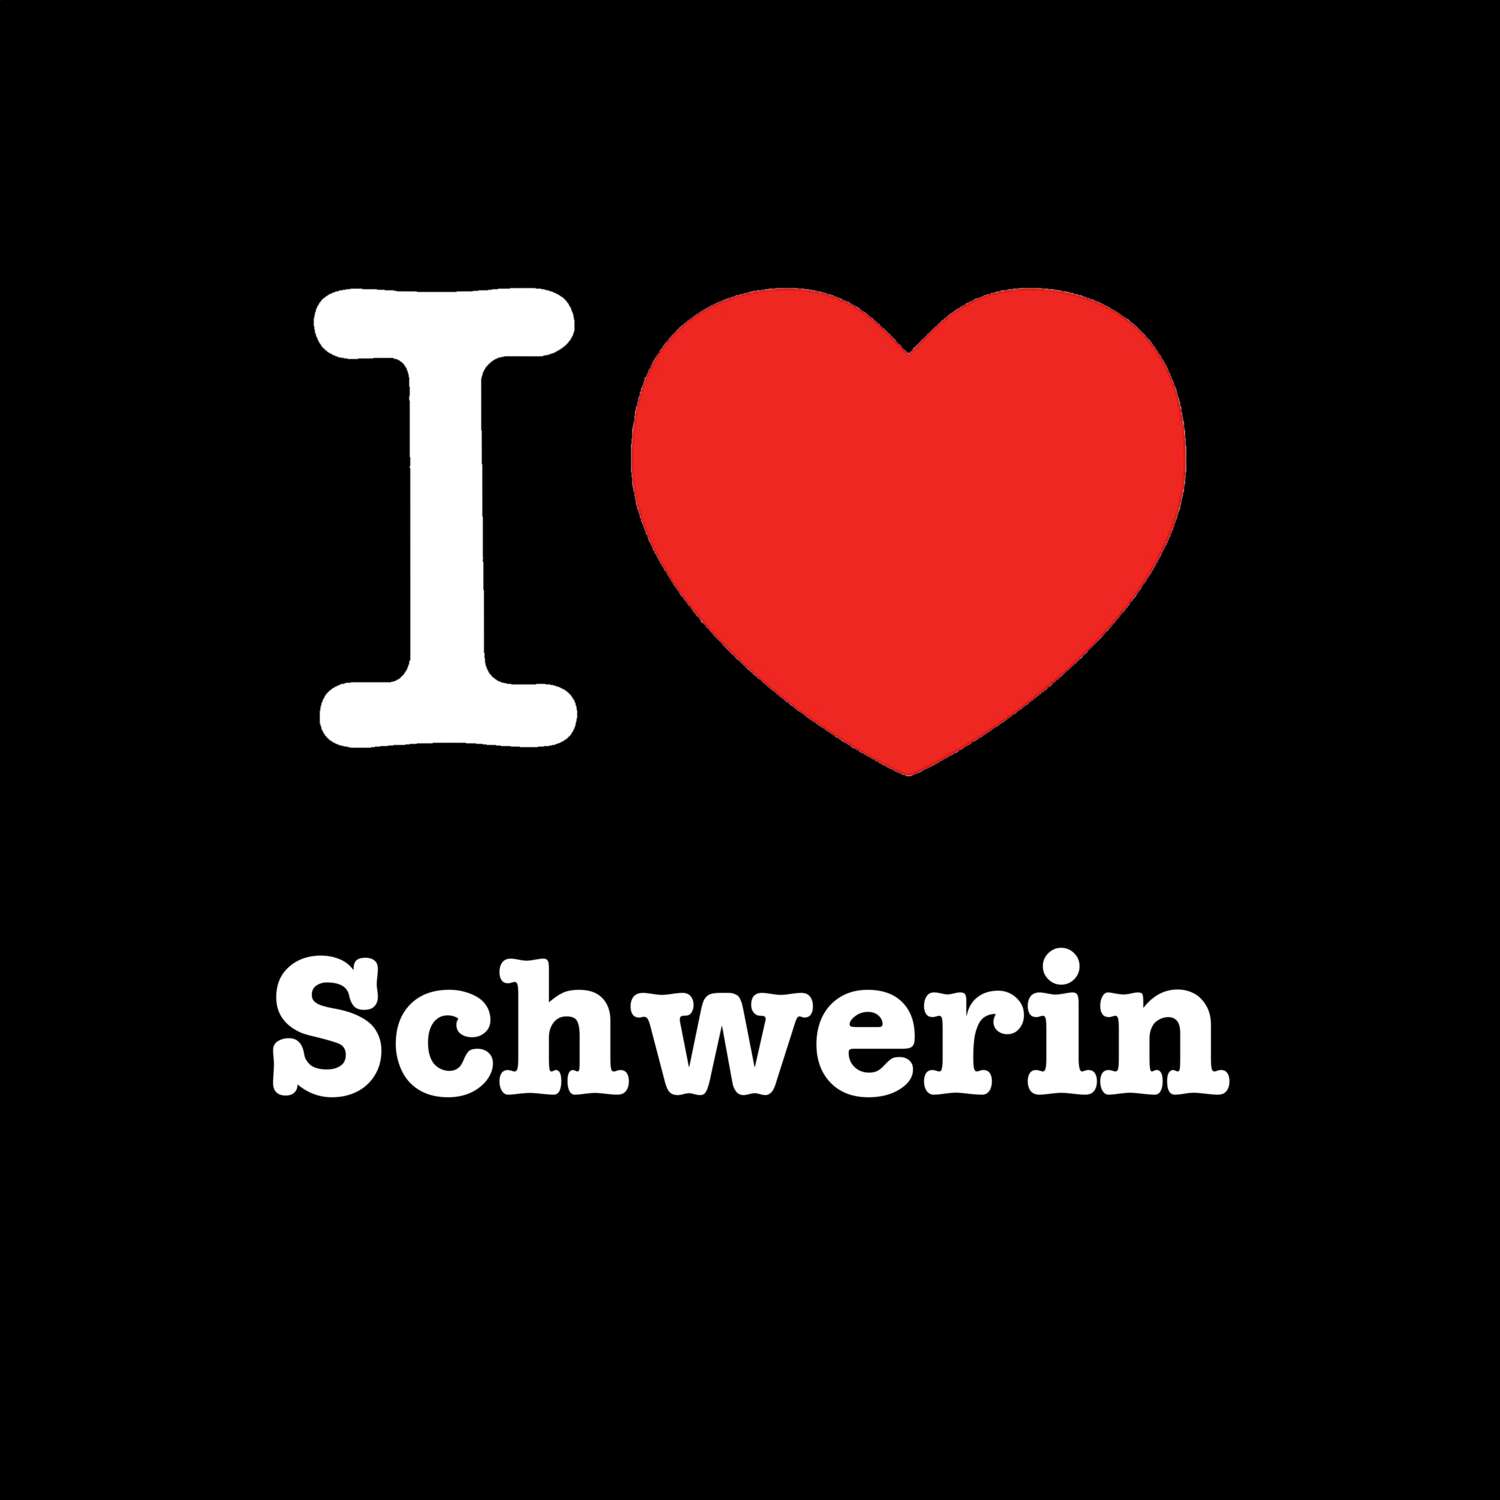 Schwerin T-Shirt »I love«